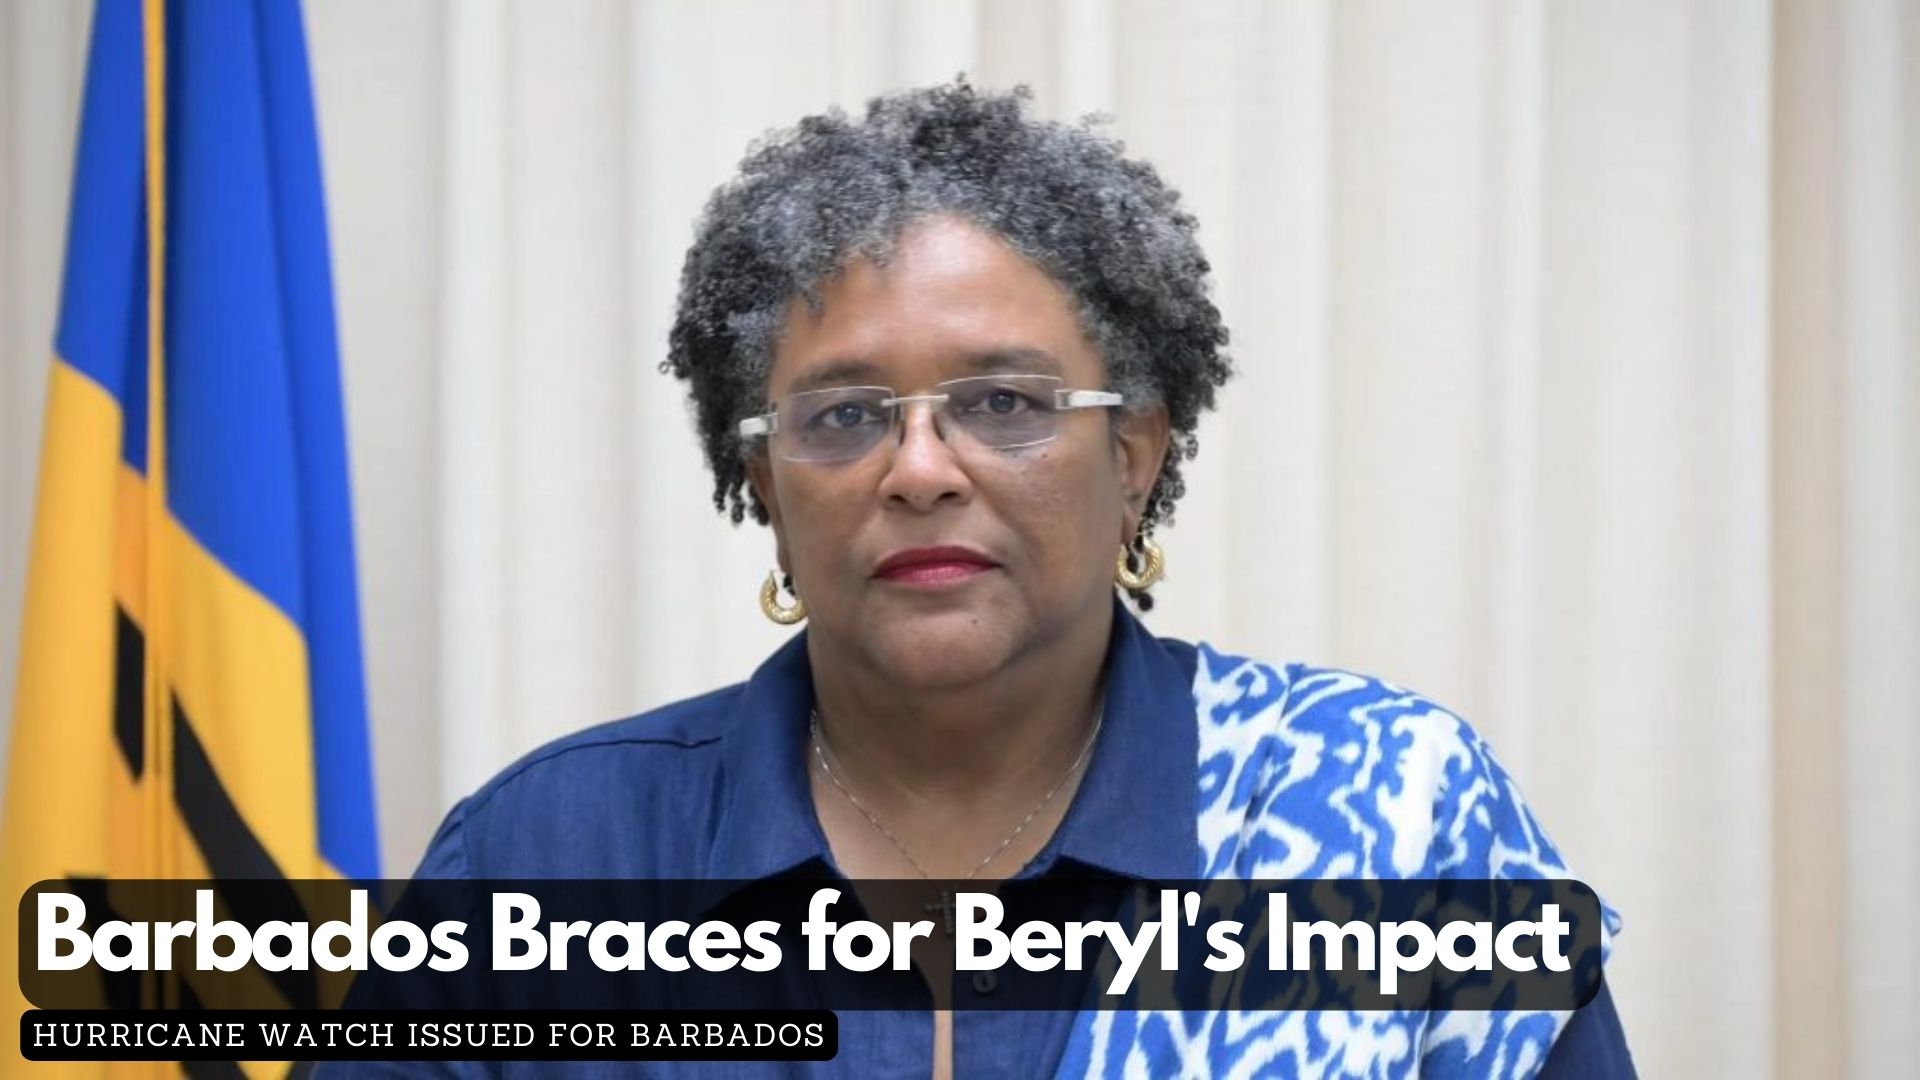 Barbados Braces for Beryl's Impact